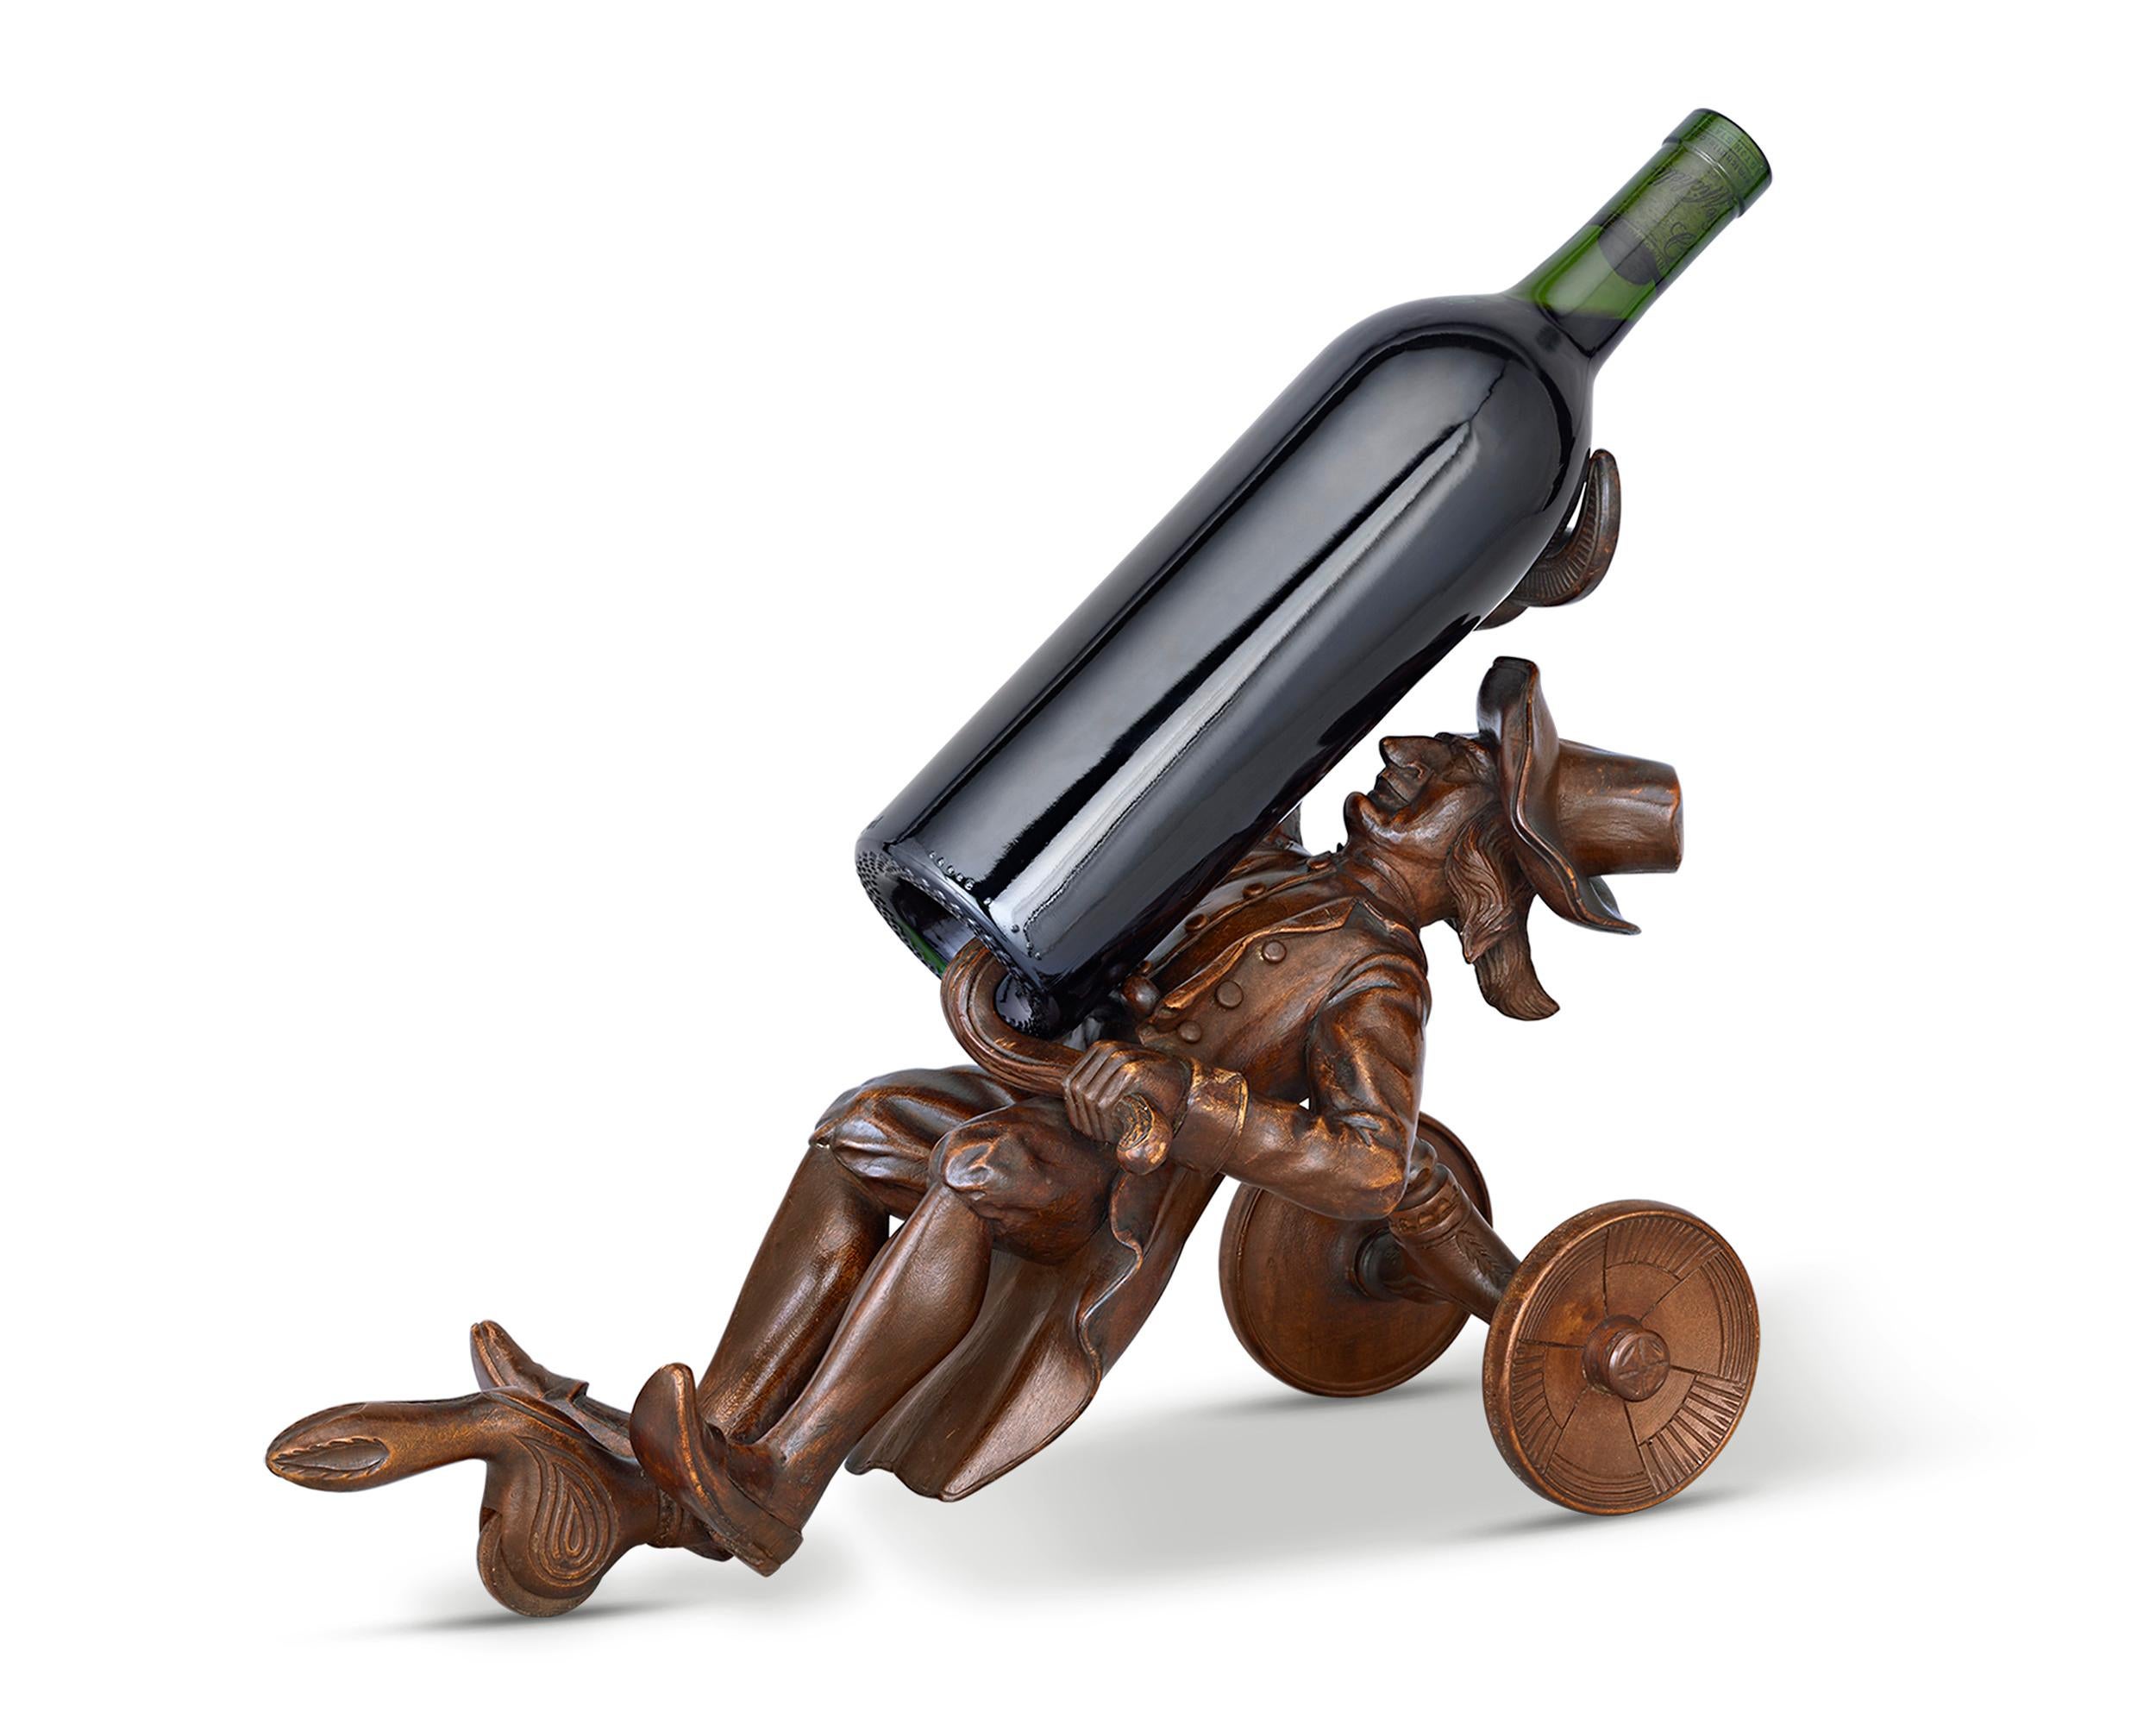 Black Forest Carved Wine Bottle Holder In Excellent Condition For Sale In New Orleans, LA